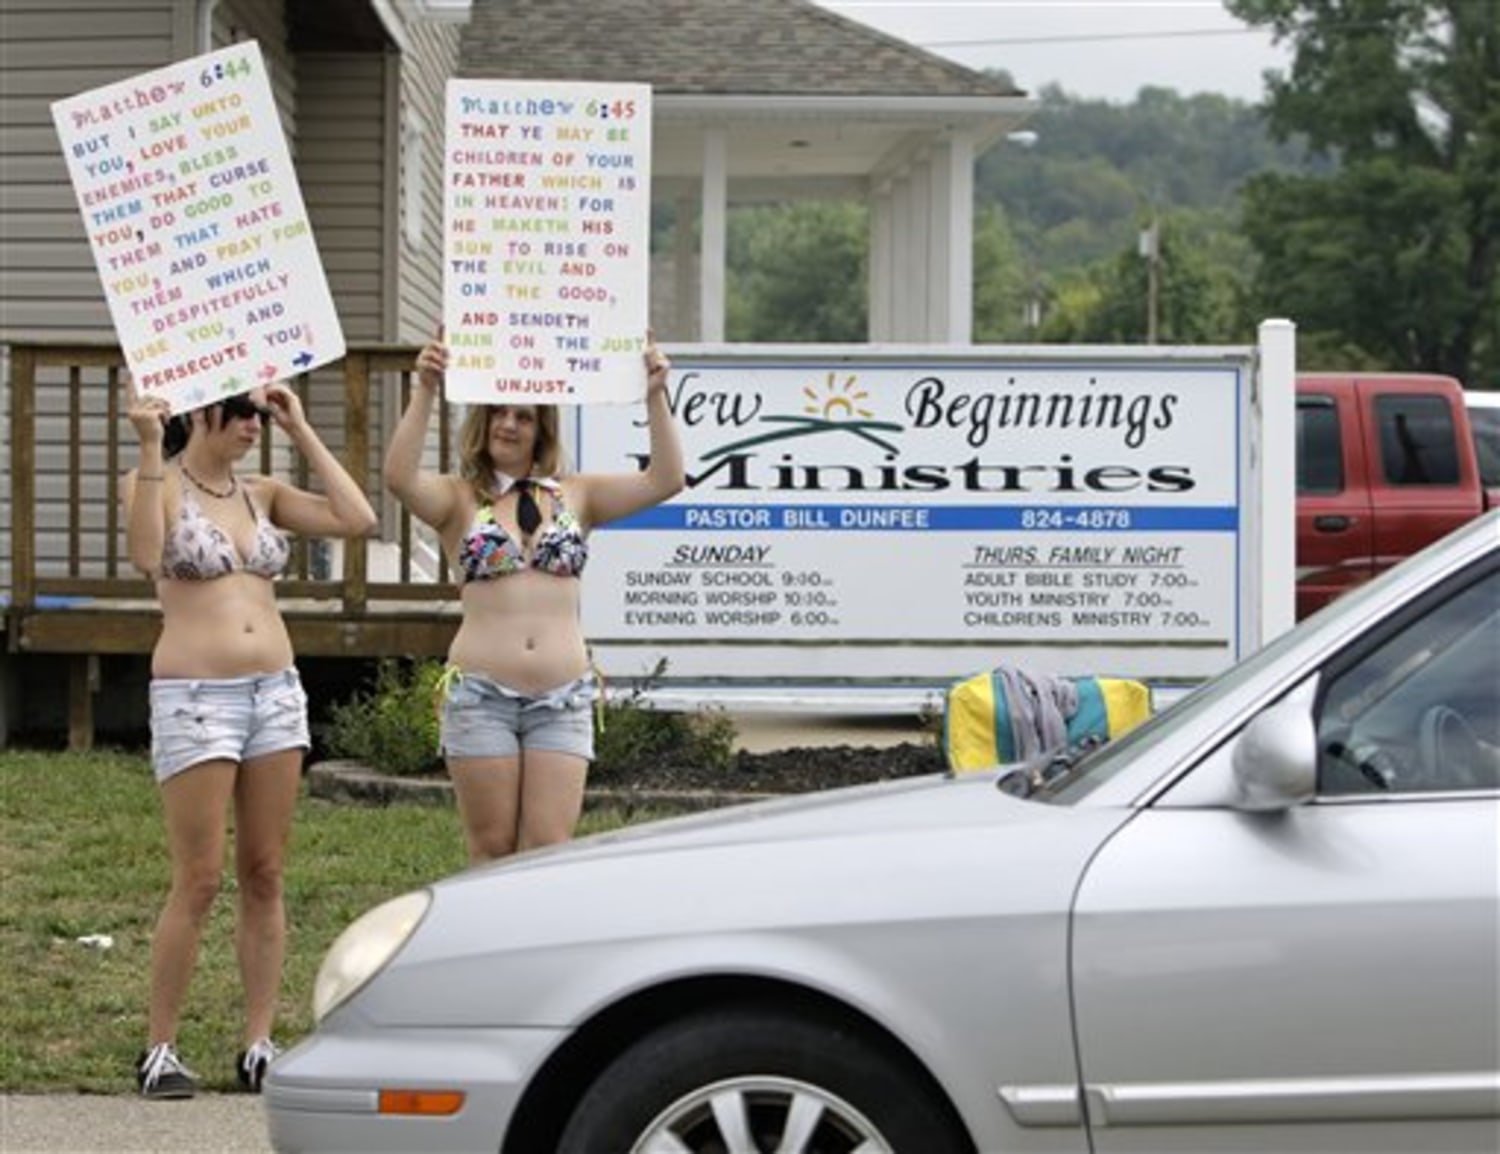 Bikini-clad strippers protest church in rural Ohio